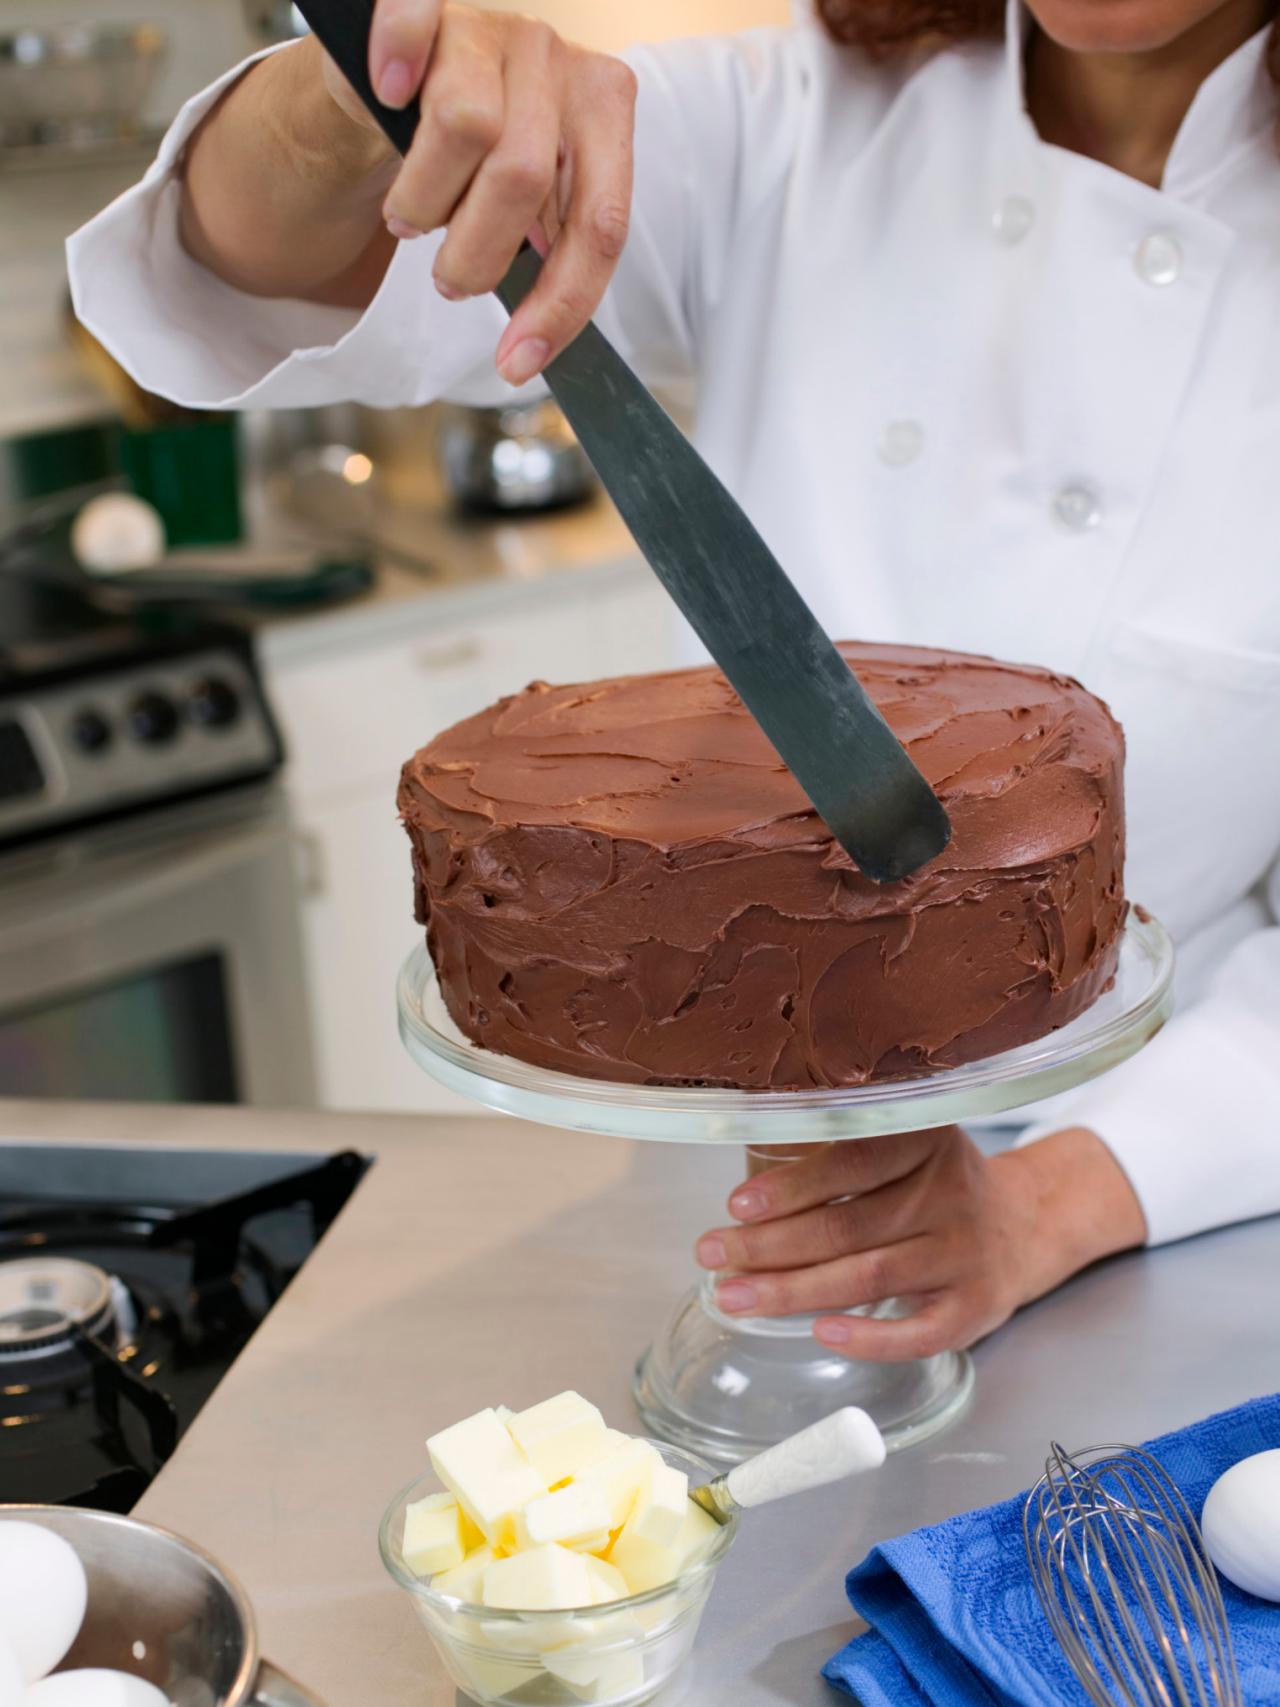 Bake a Cake From Scratch | HGTV